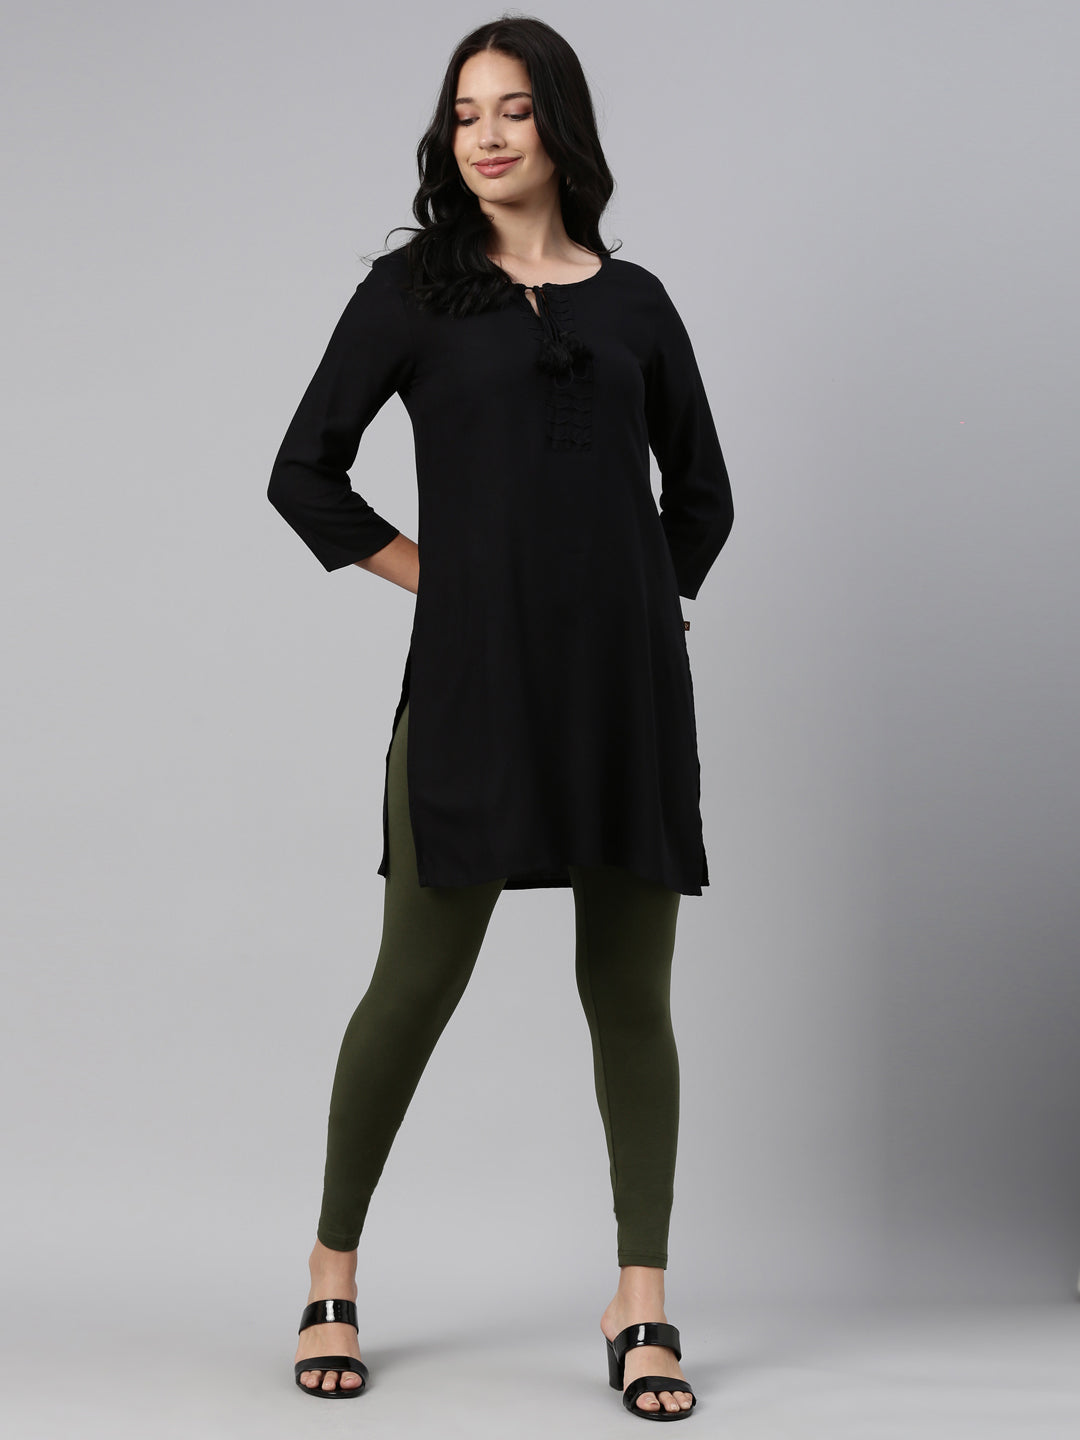 Women Tunic Tops for Leggings, Asymmetrical V Neck Casual Tee Black S :  Amazon.in: Fashion